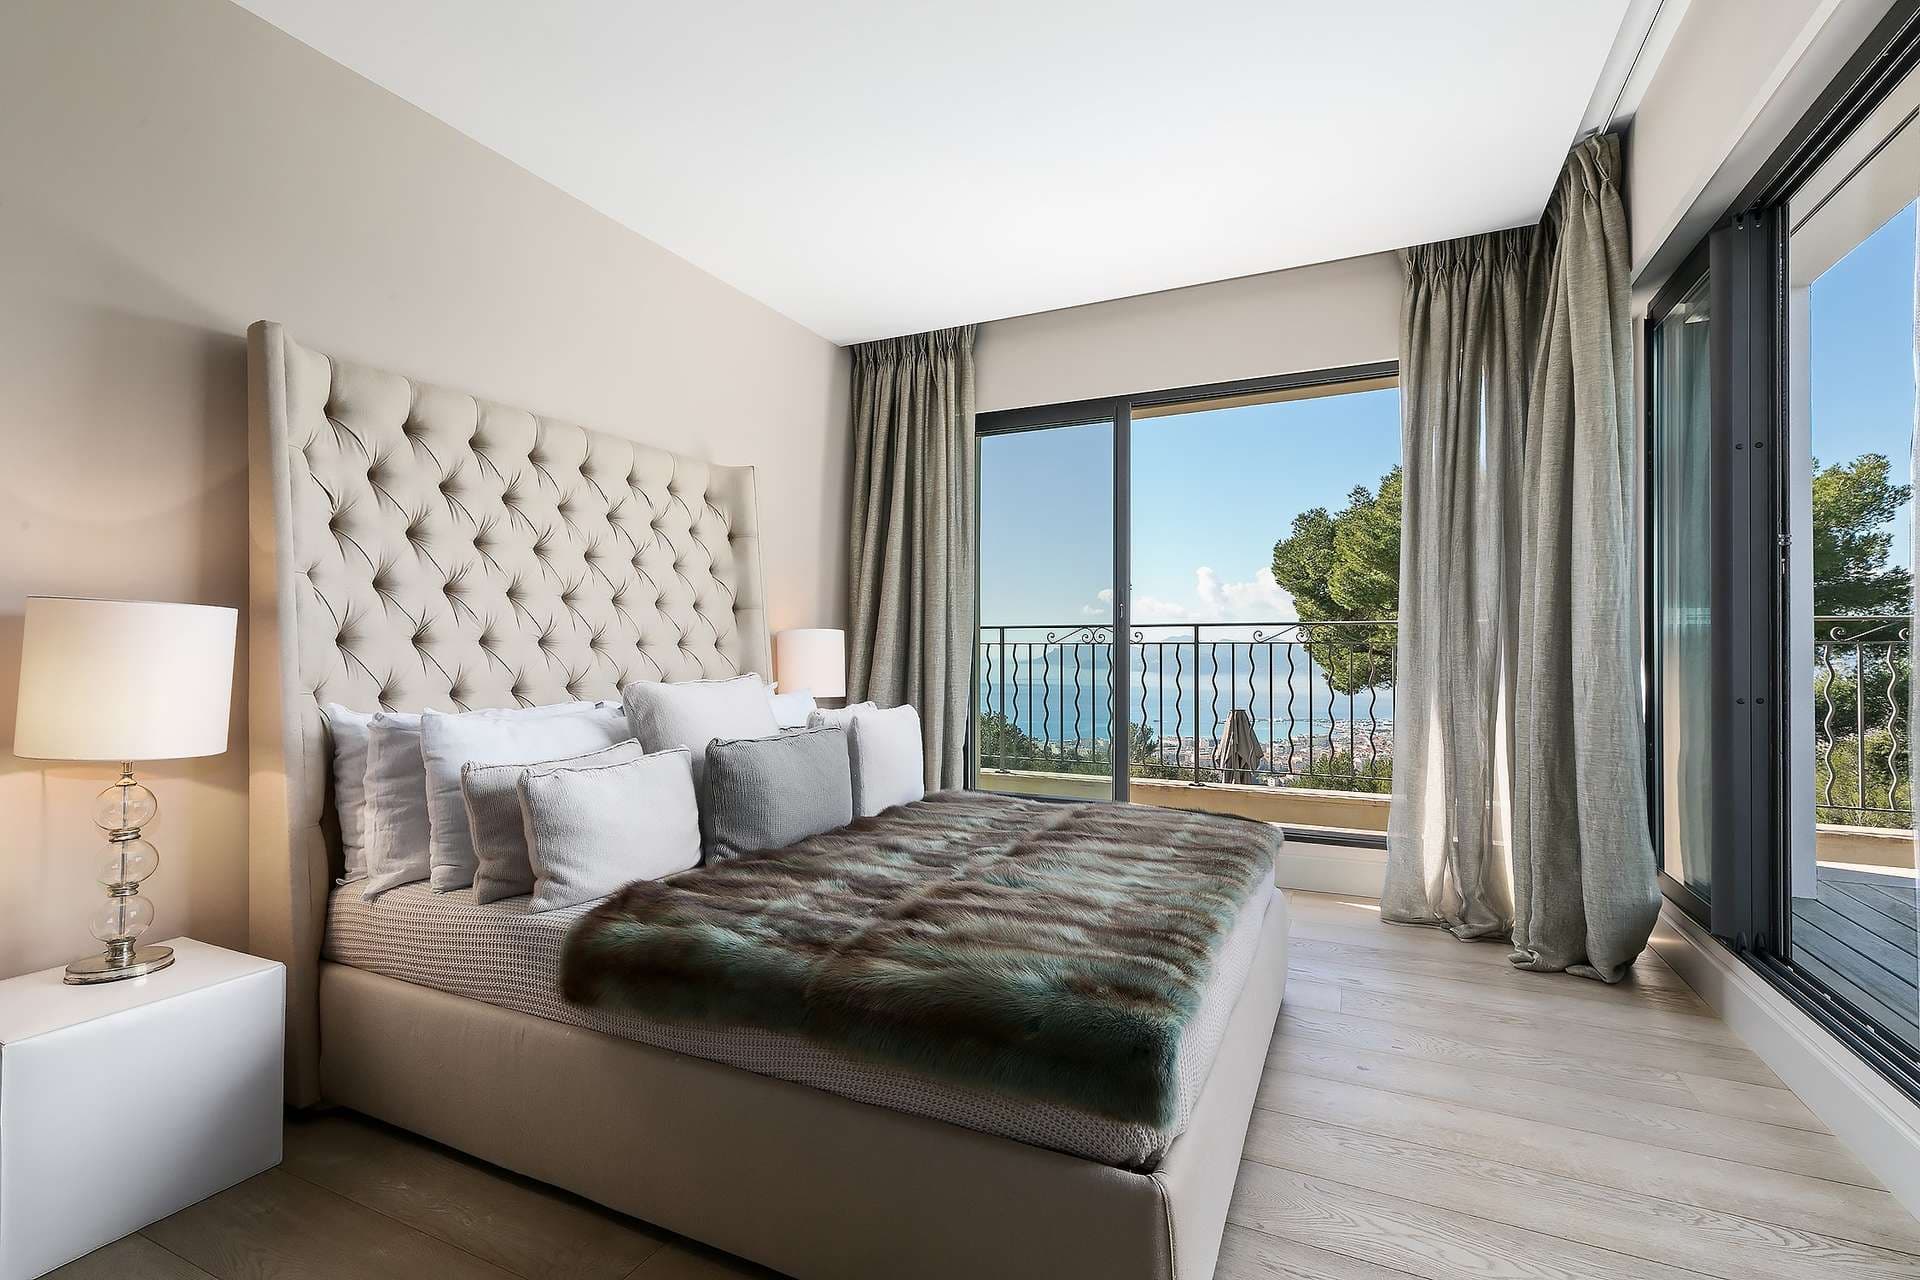 6 Bedroom Villa For Sale Cannes Lp0990 153a07e4ebcc6000.jpg